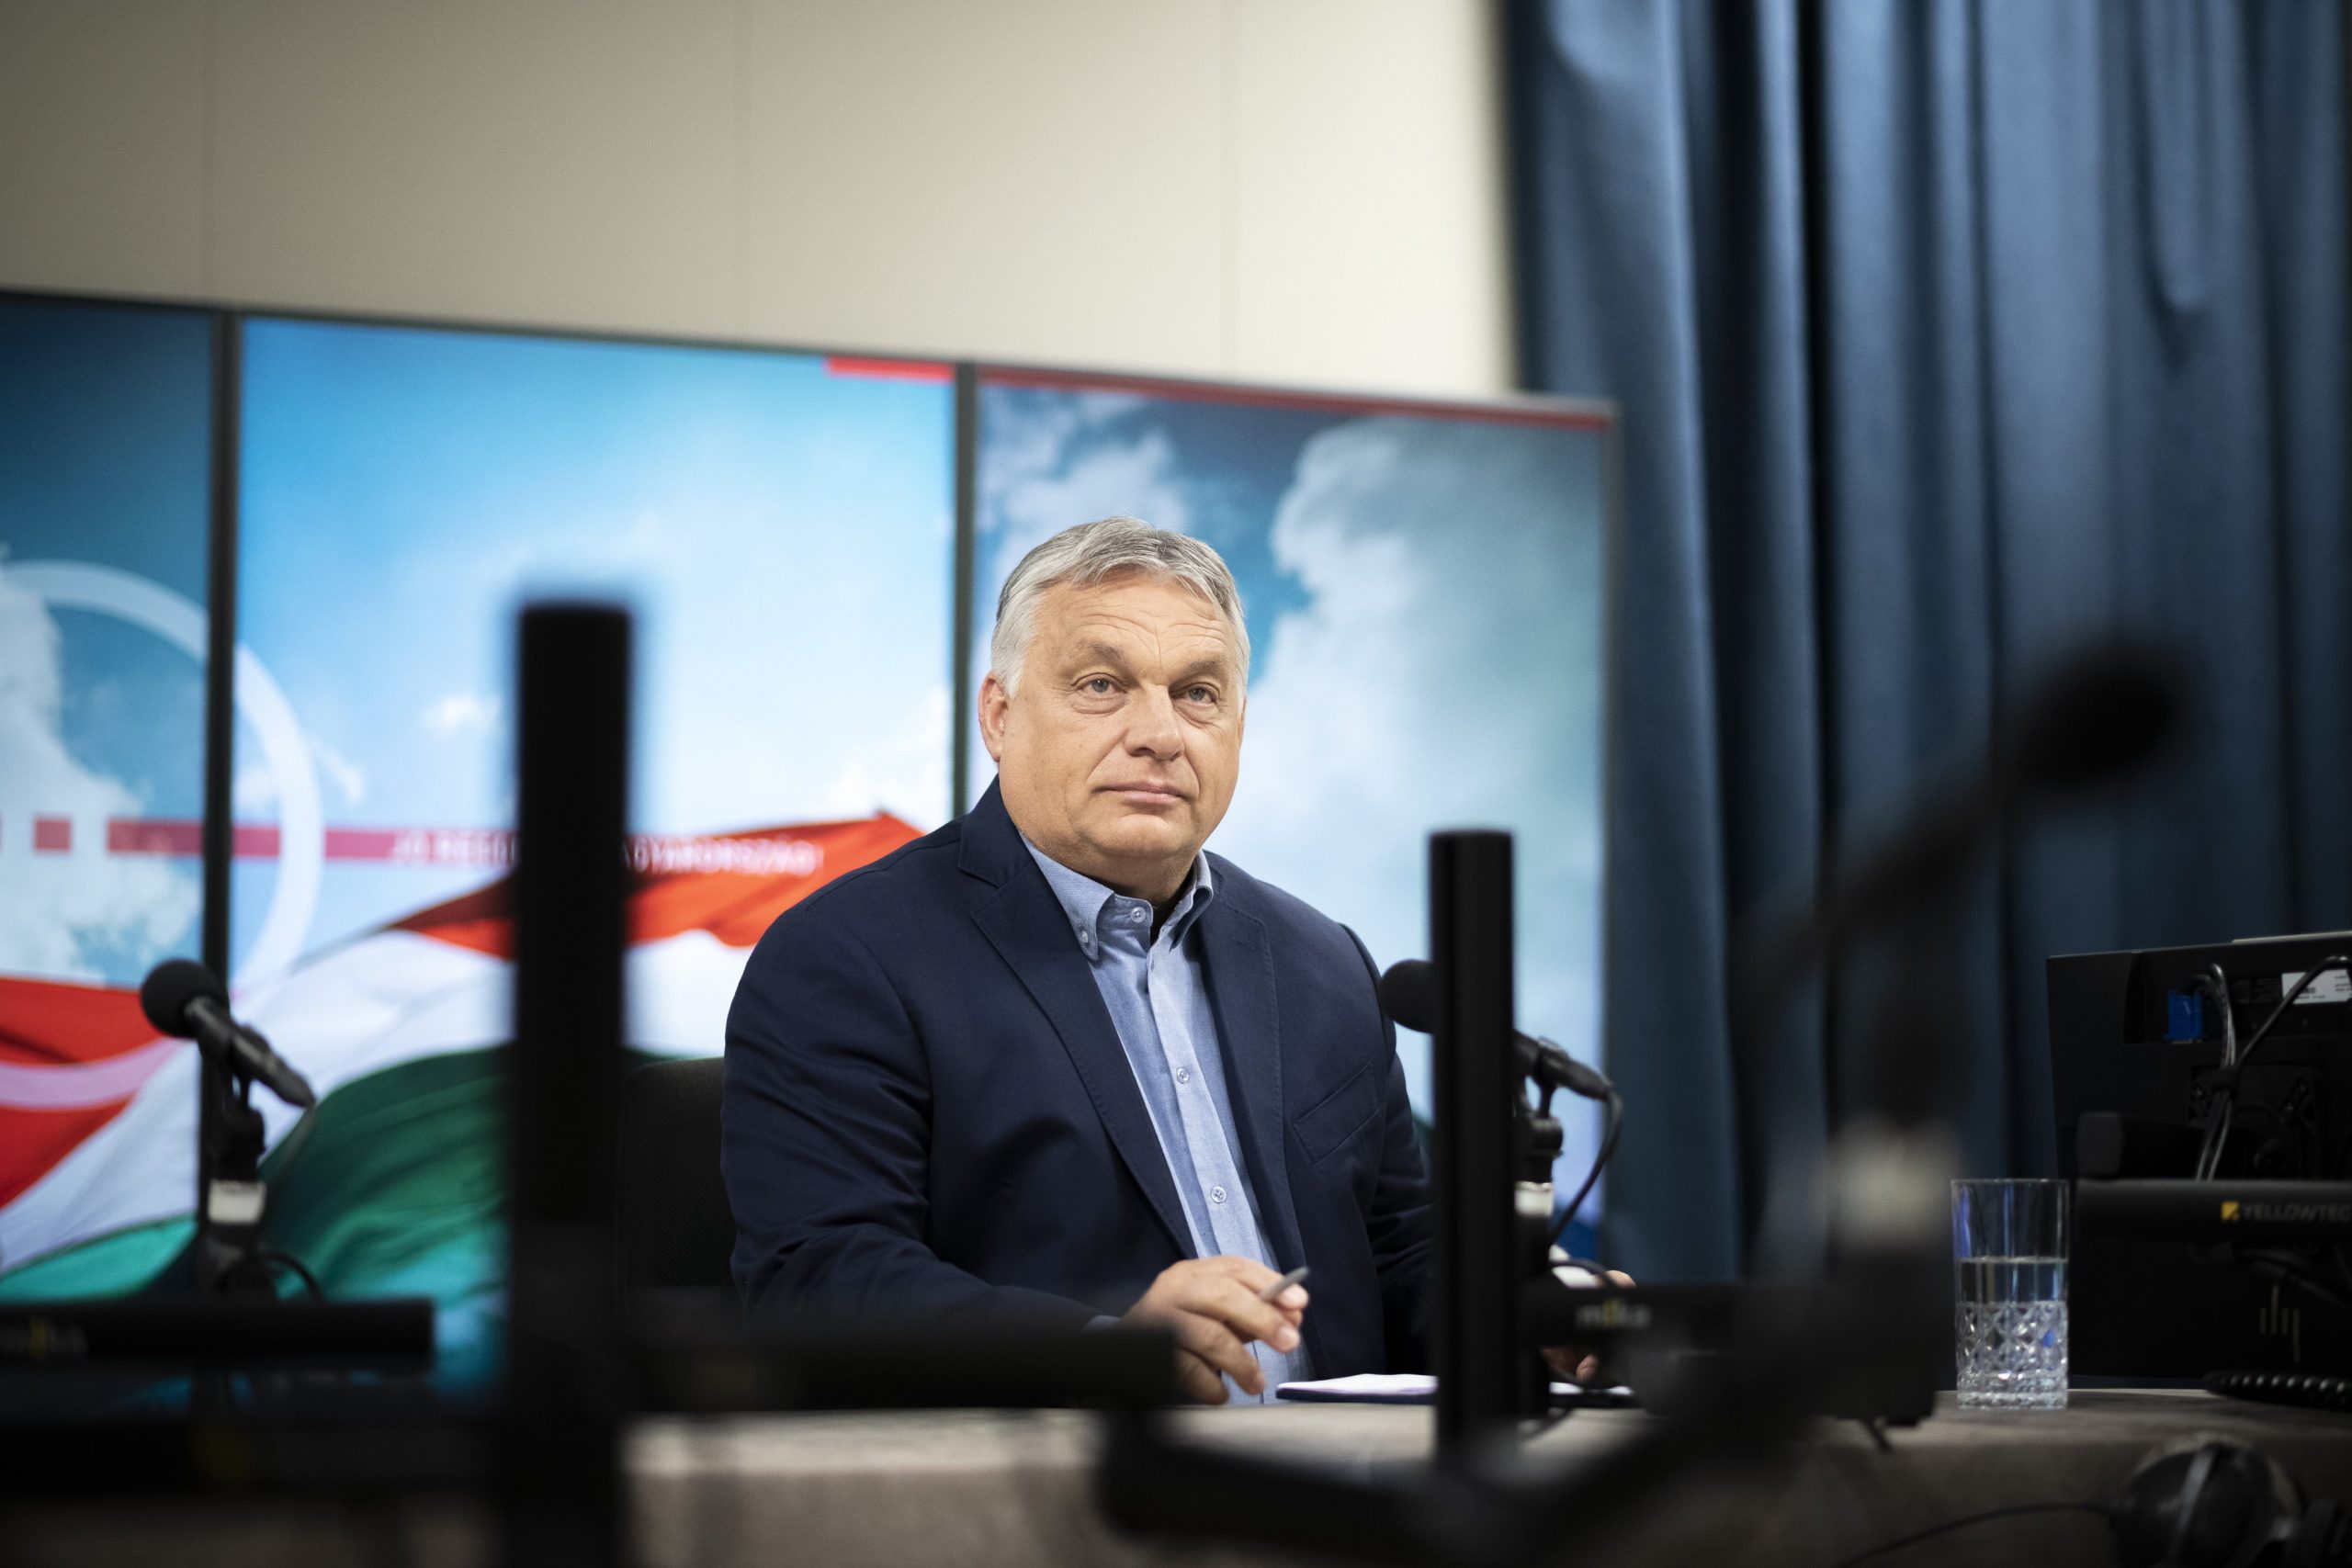 Prime Minister Orbán: 